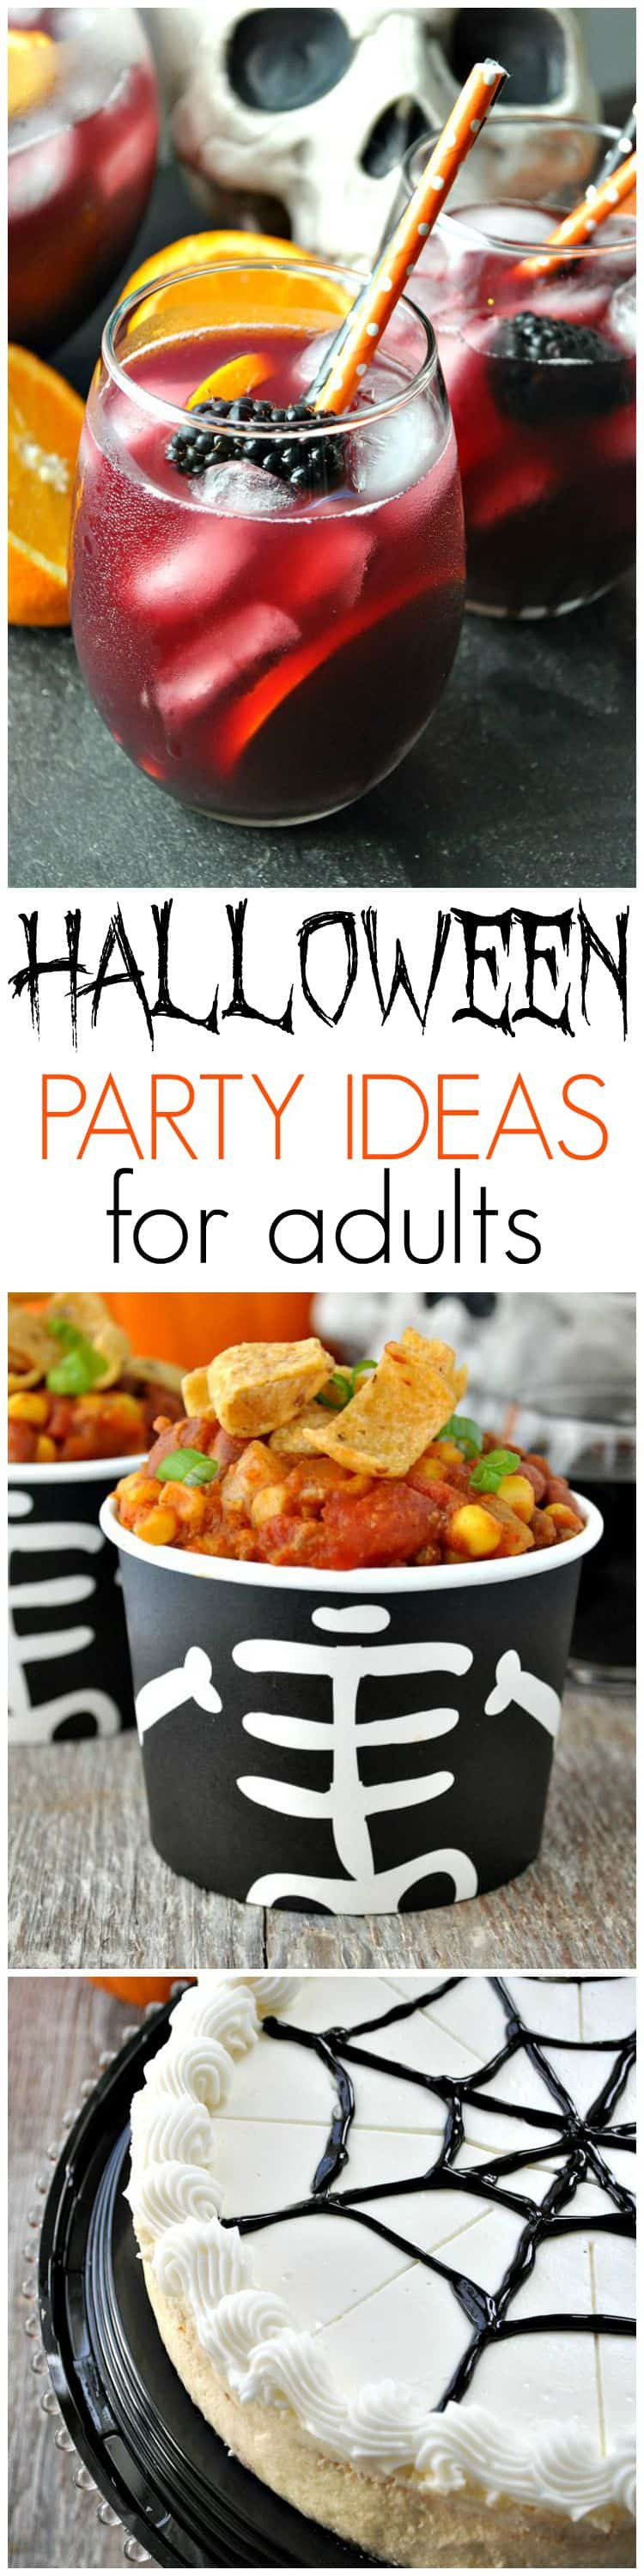 Ideas For Halloween Party
 Slow Cooker Pumpkin Chili Halloween Party Ideas for